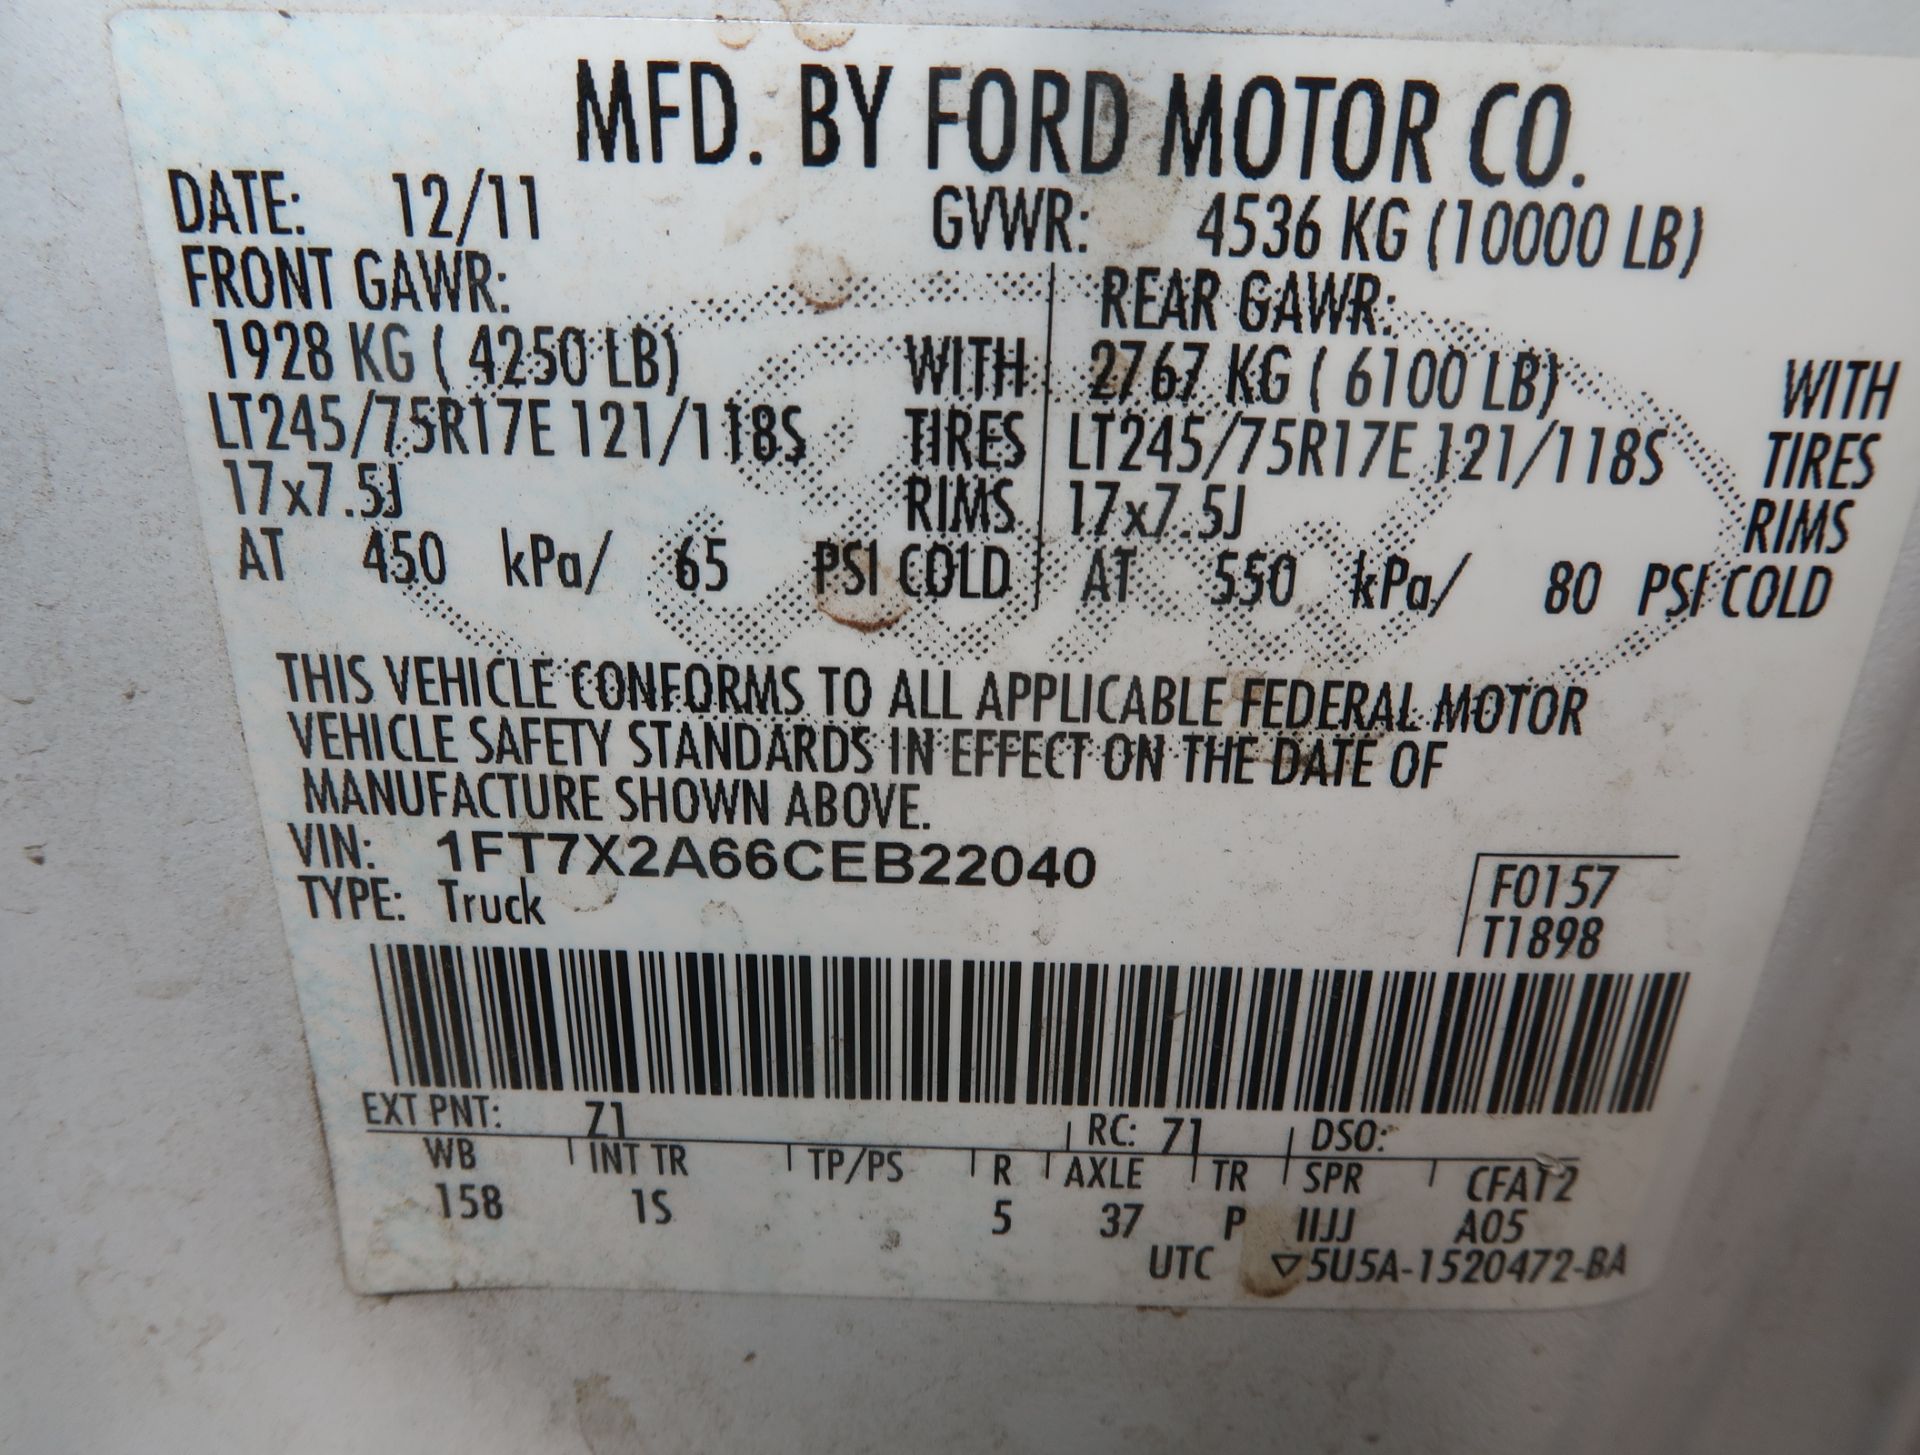 2012 FORD F250 XL SUPER DUTY VIN. 1FT7X2A66CEB22040 MIL. 122,634 6.2L Flex Fuel V8 - Image 8 of 9